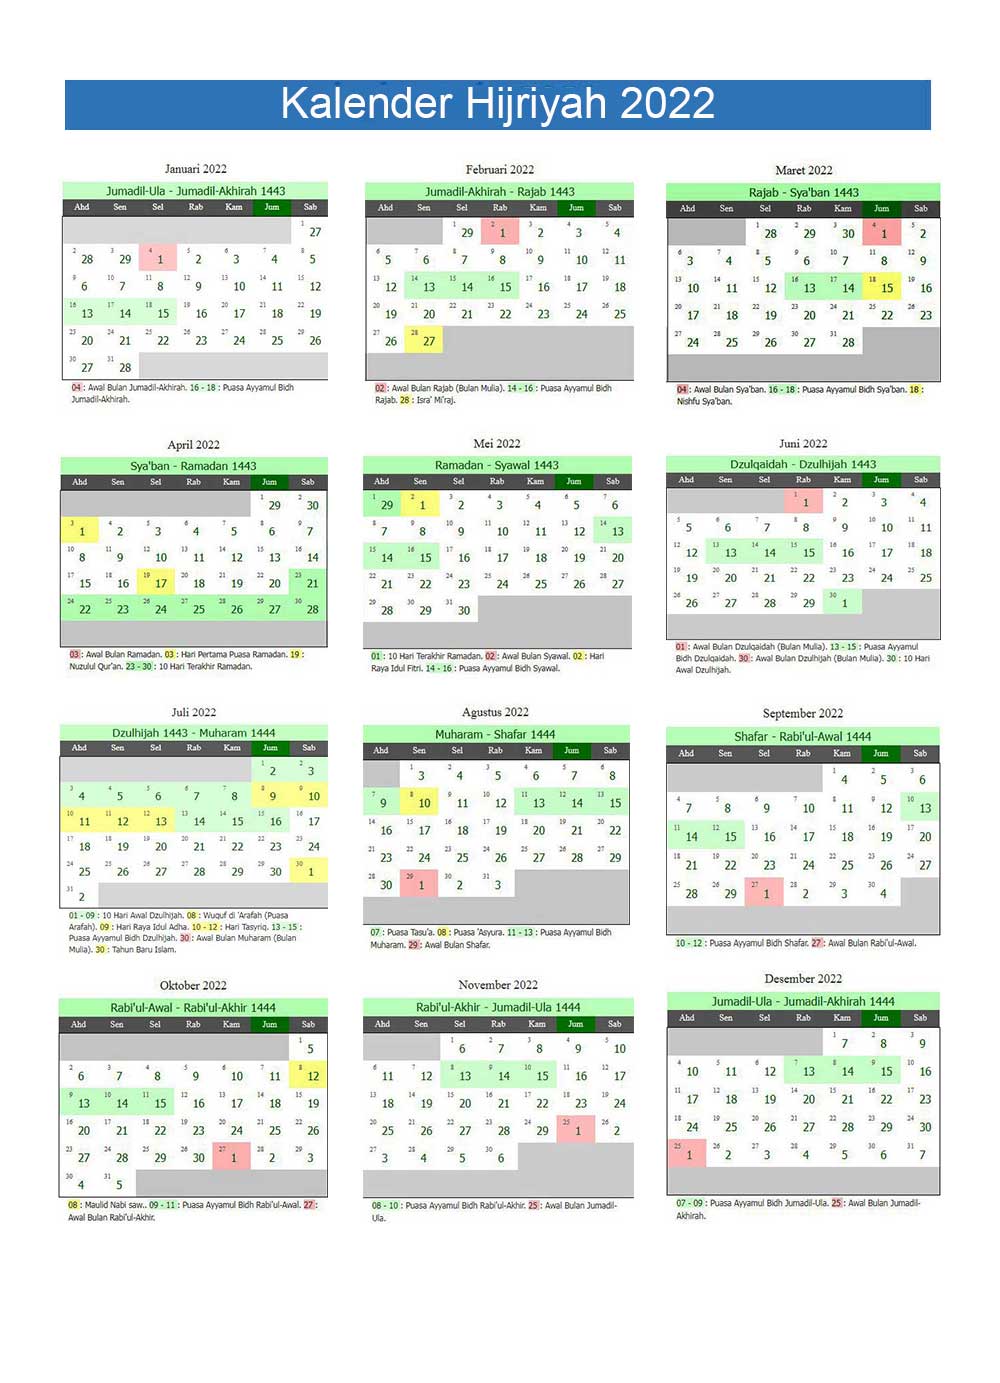 Islam 19 maret 2022 kalender Kalender Hijriah